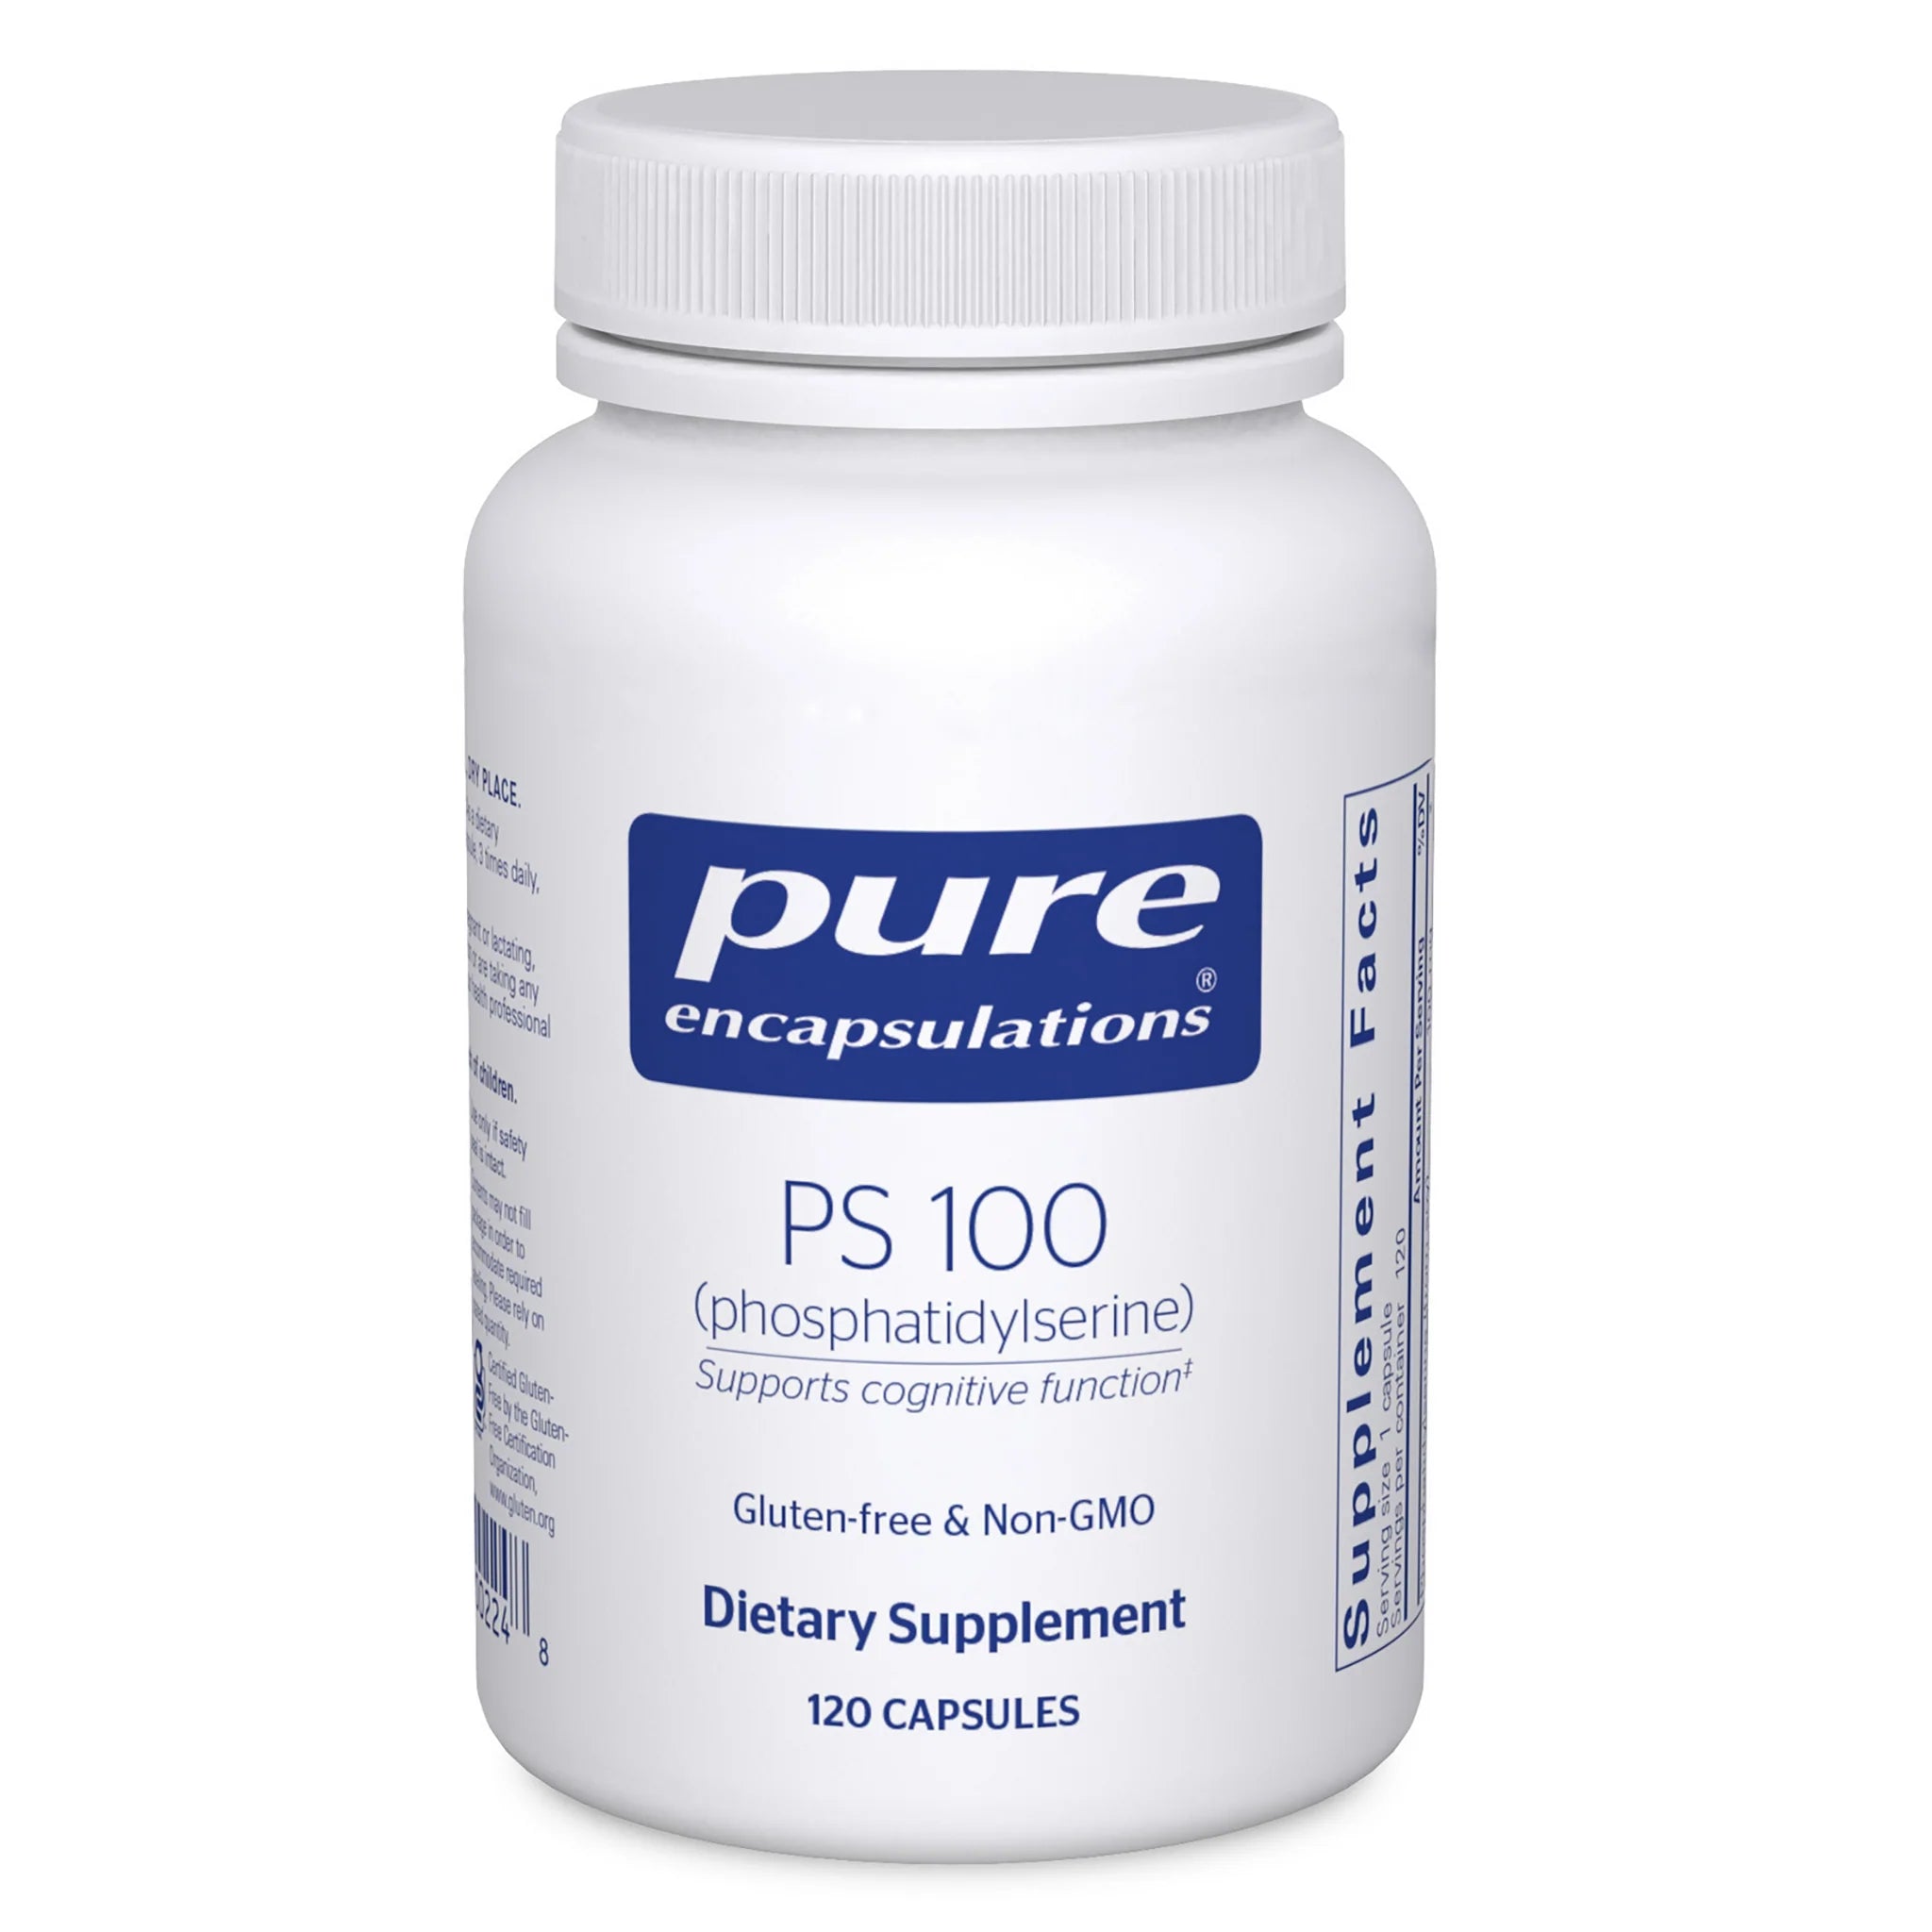 PS 100 (Phosphatidylserine)